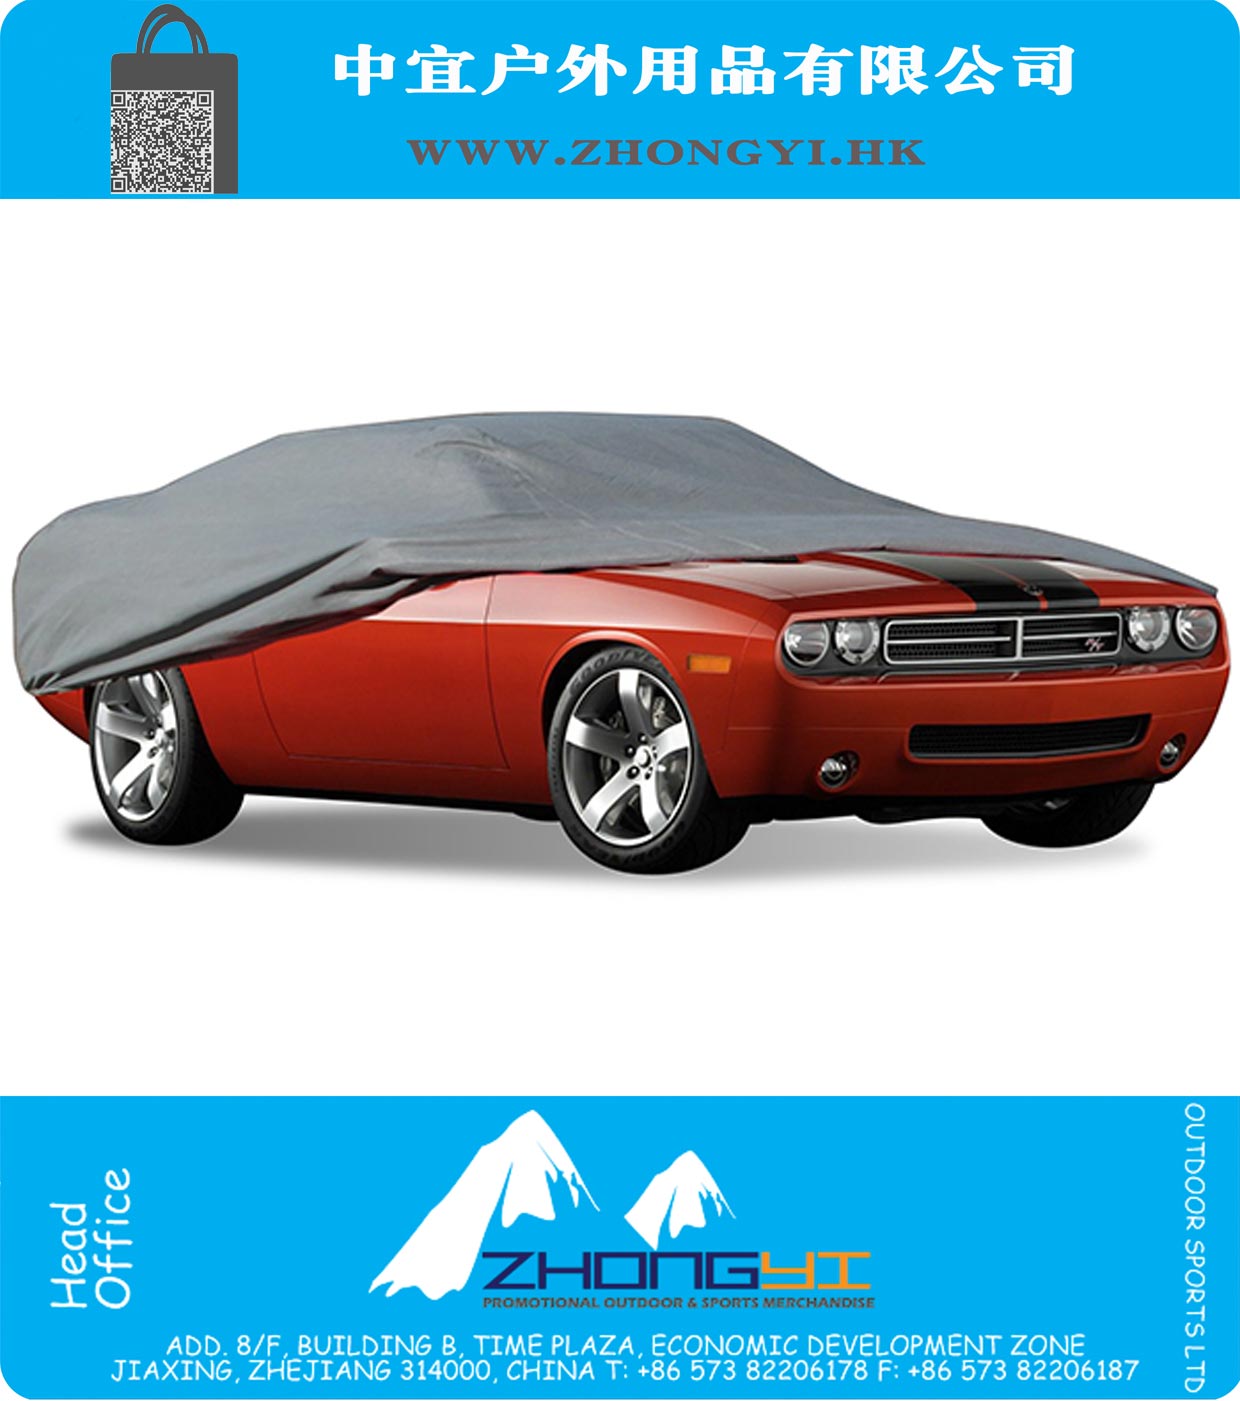 Easyfit 4-Layer Car Cover